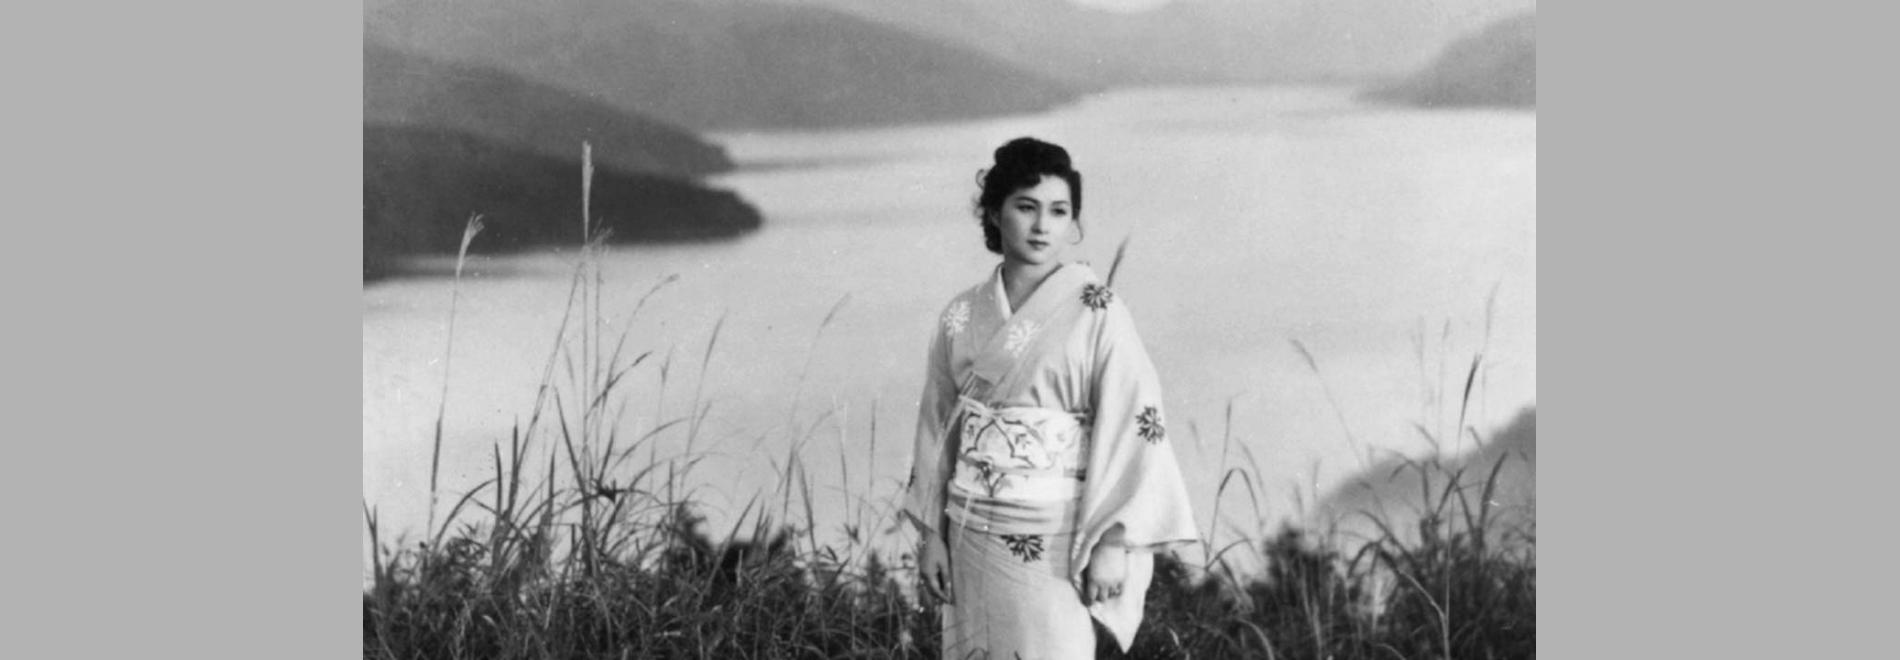 Yuki fujin ezu / El destí de la senyora Yuki (Kenji Mizoguchi, 1950)